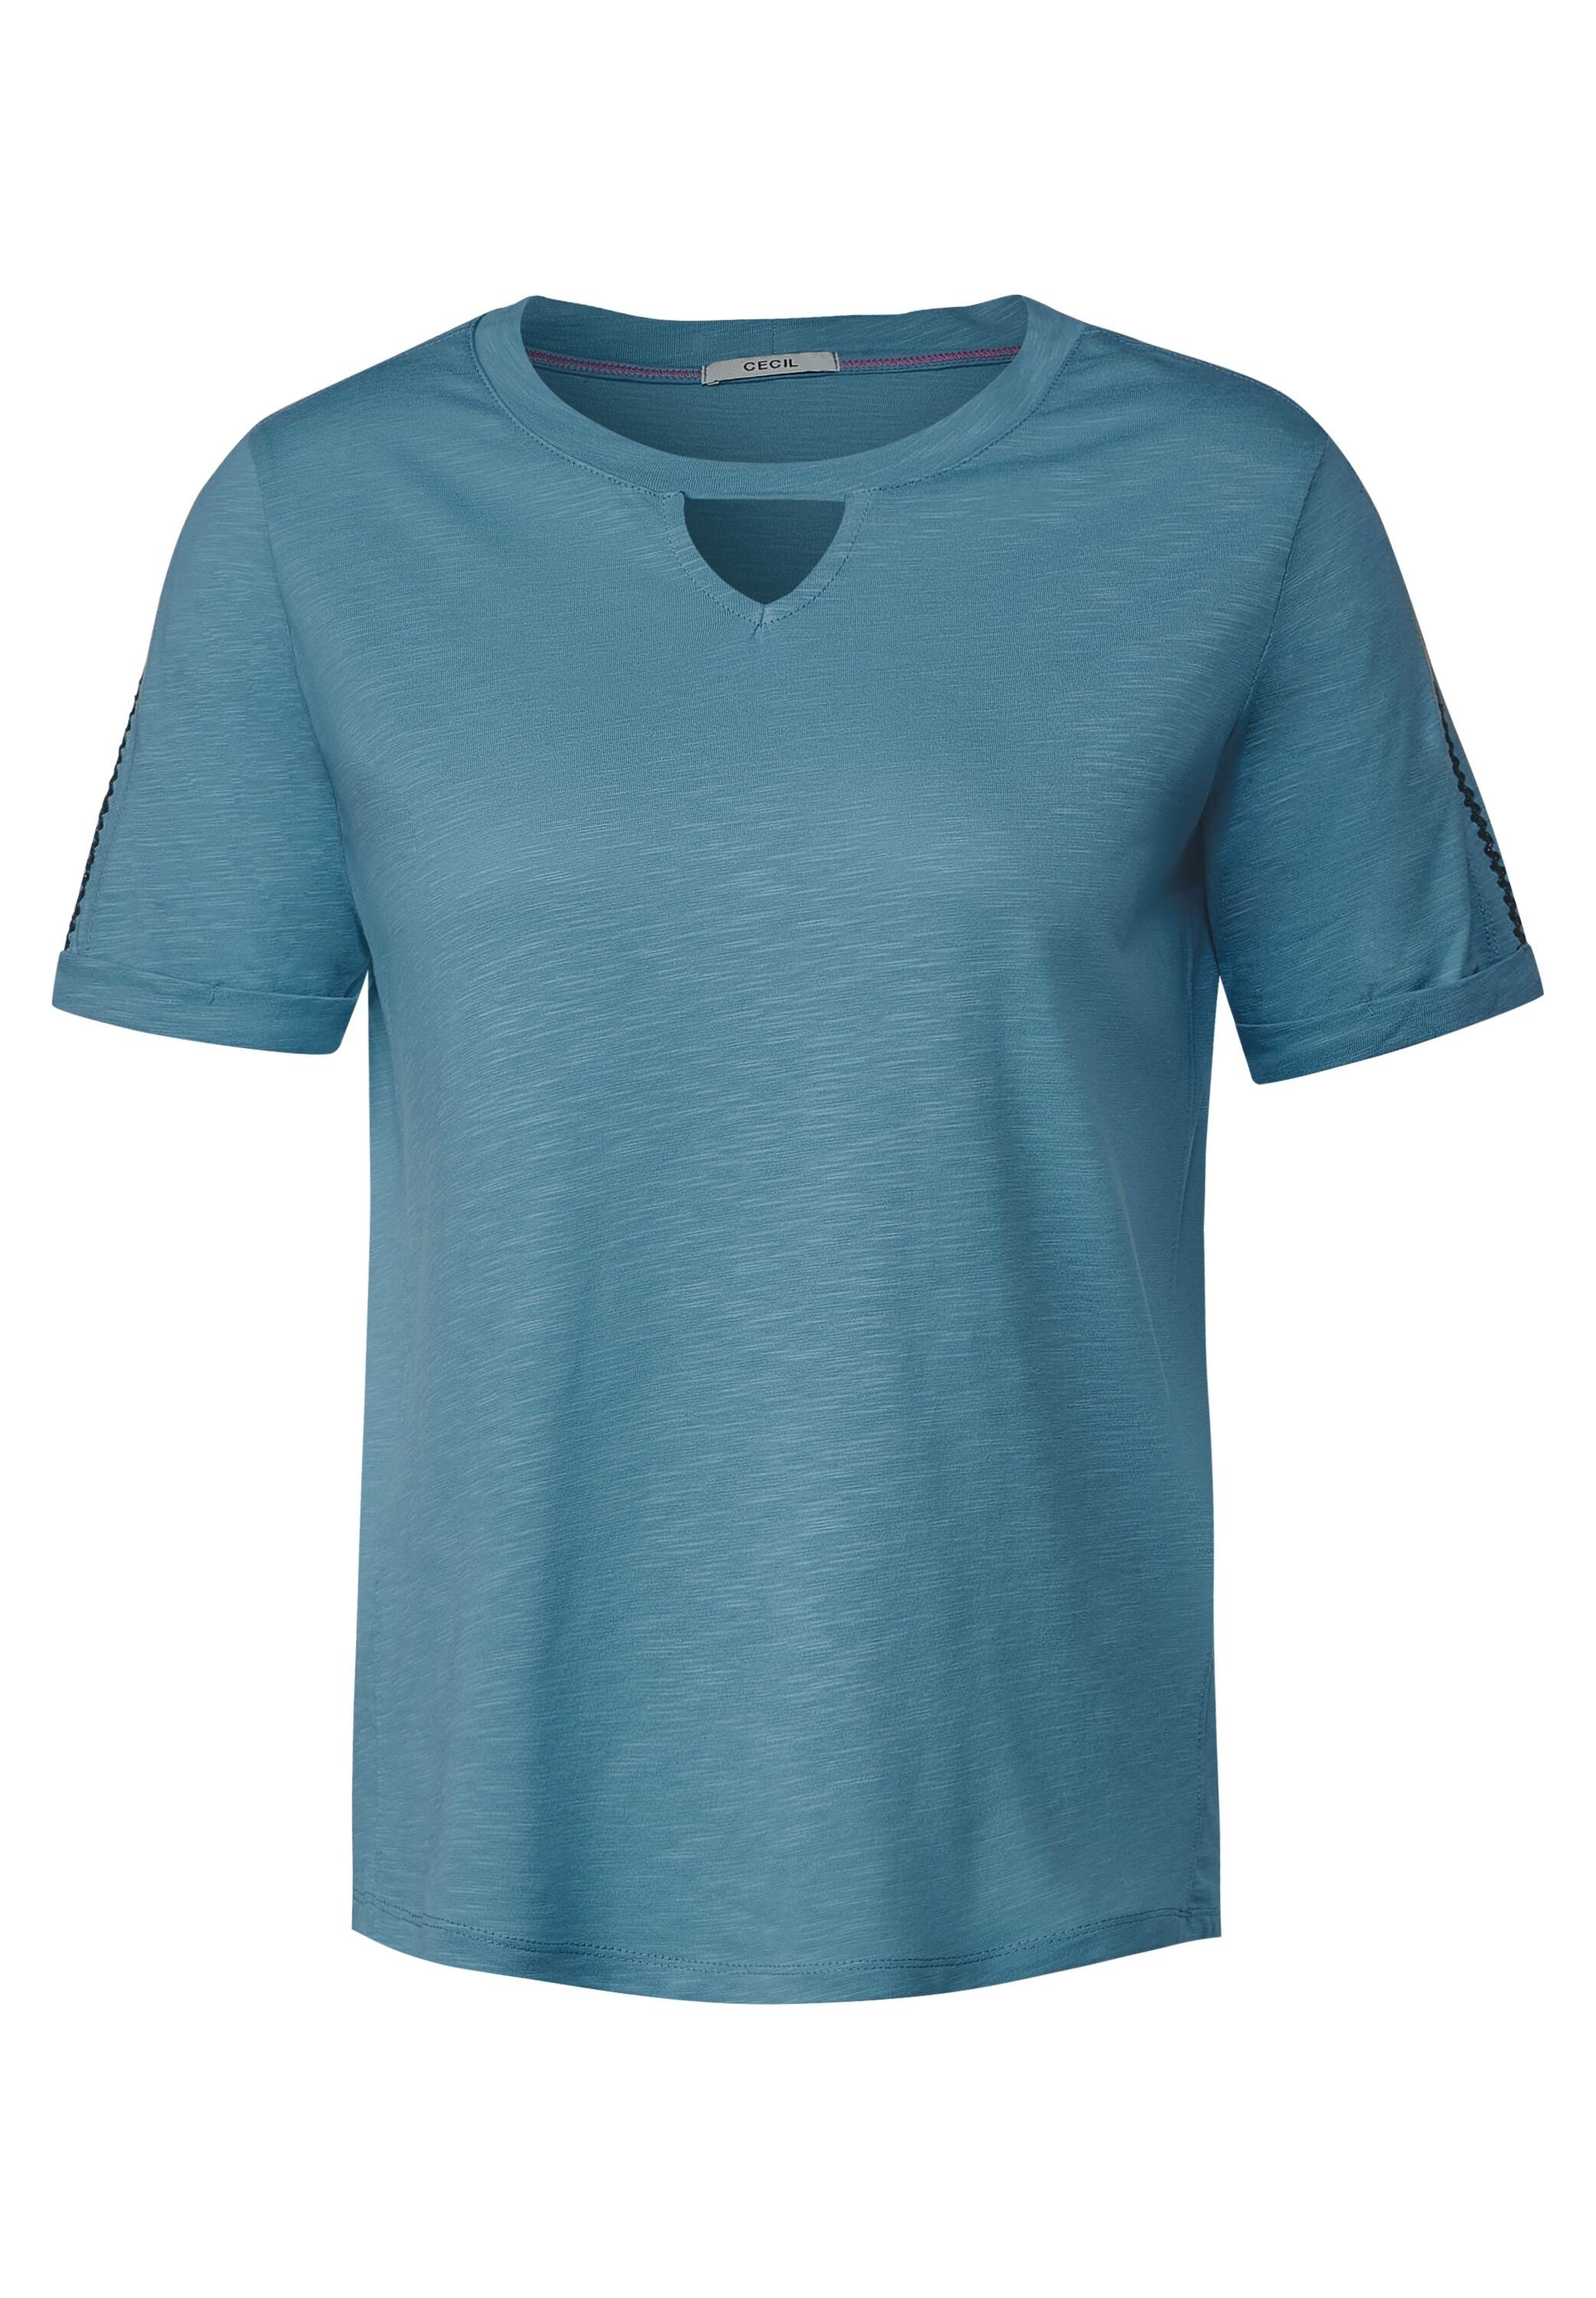 softem T-Shirt Cecil adriatic blue aus Materialmix